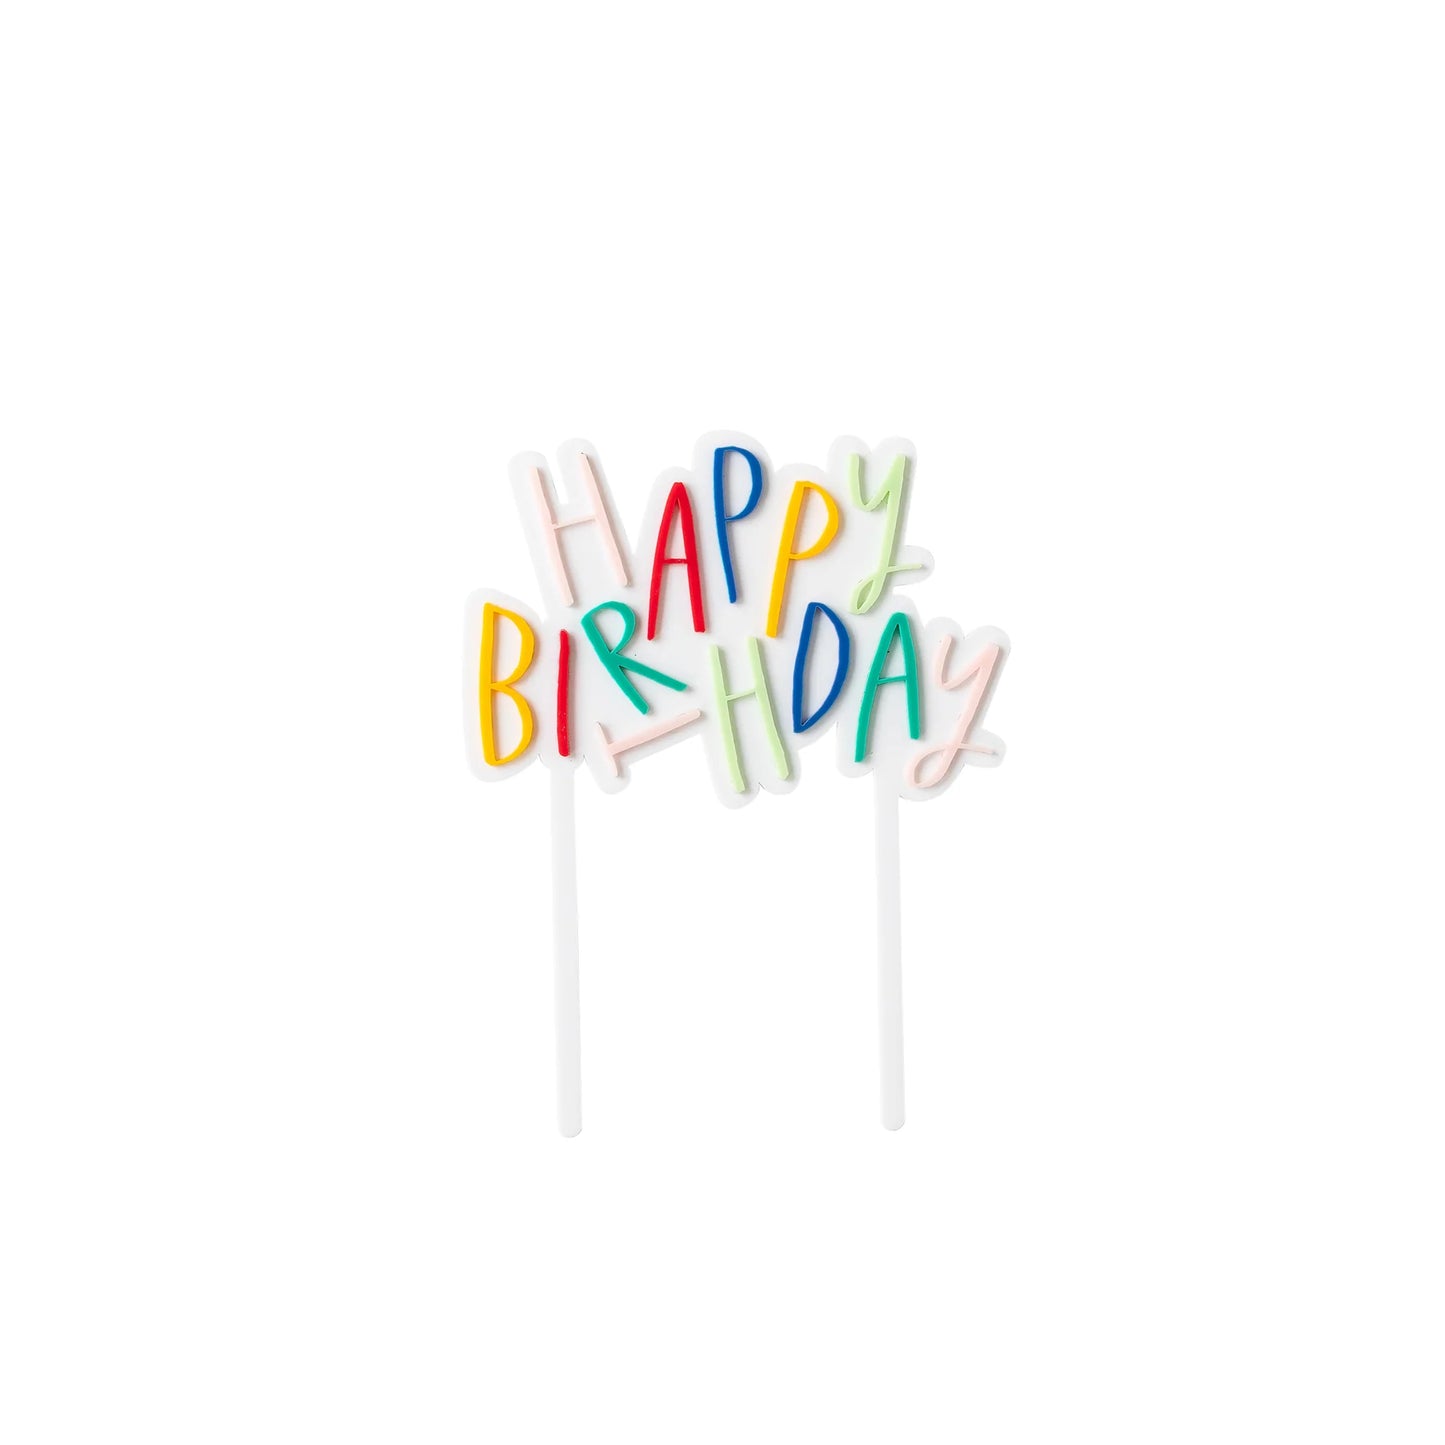 Oui Party Acrylic Cake Topper: Happy Birthday